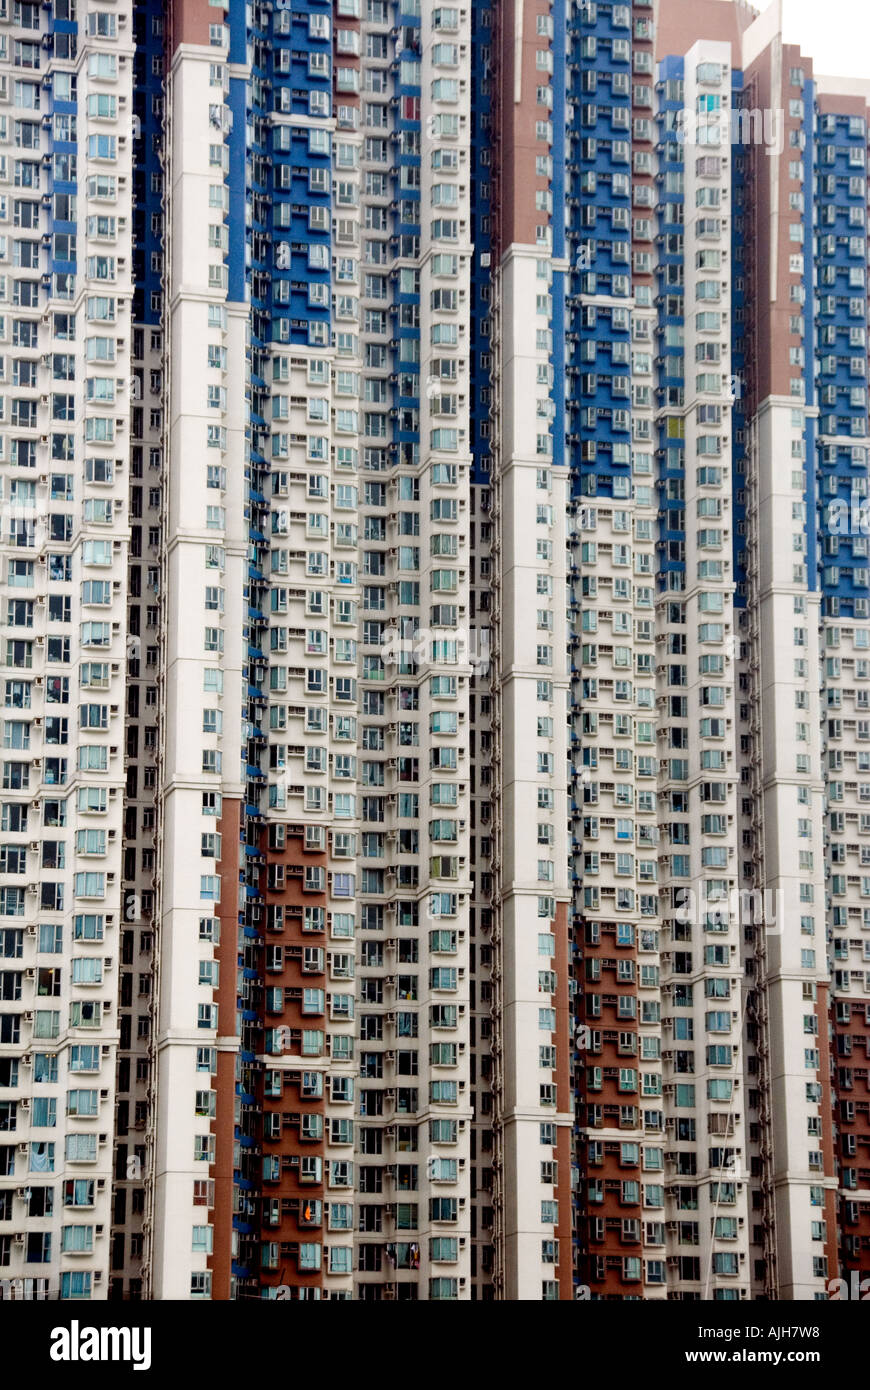 High rise living in Hong Kong Stock Photo